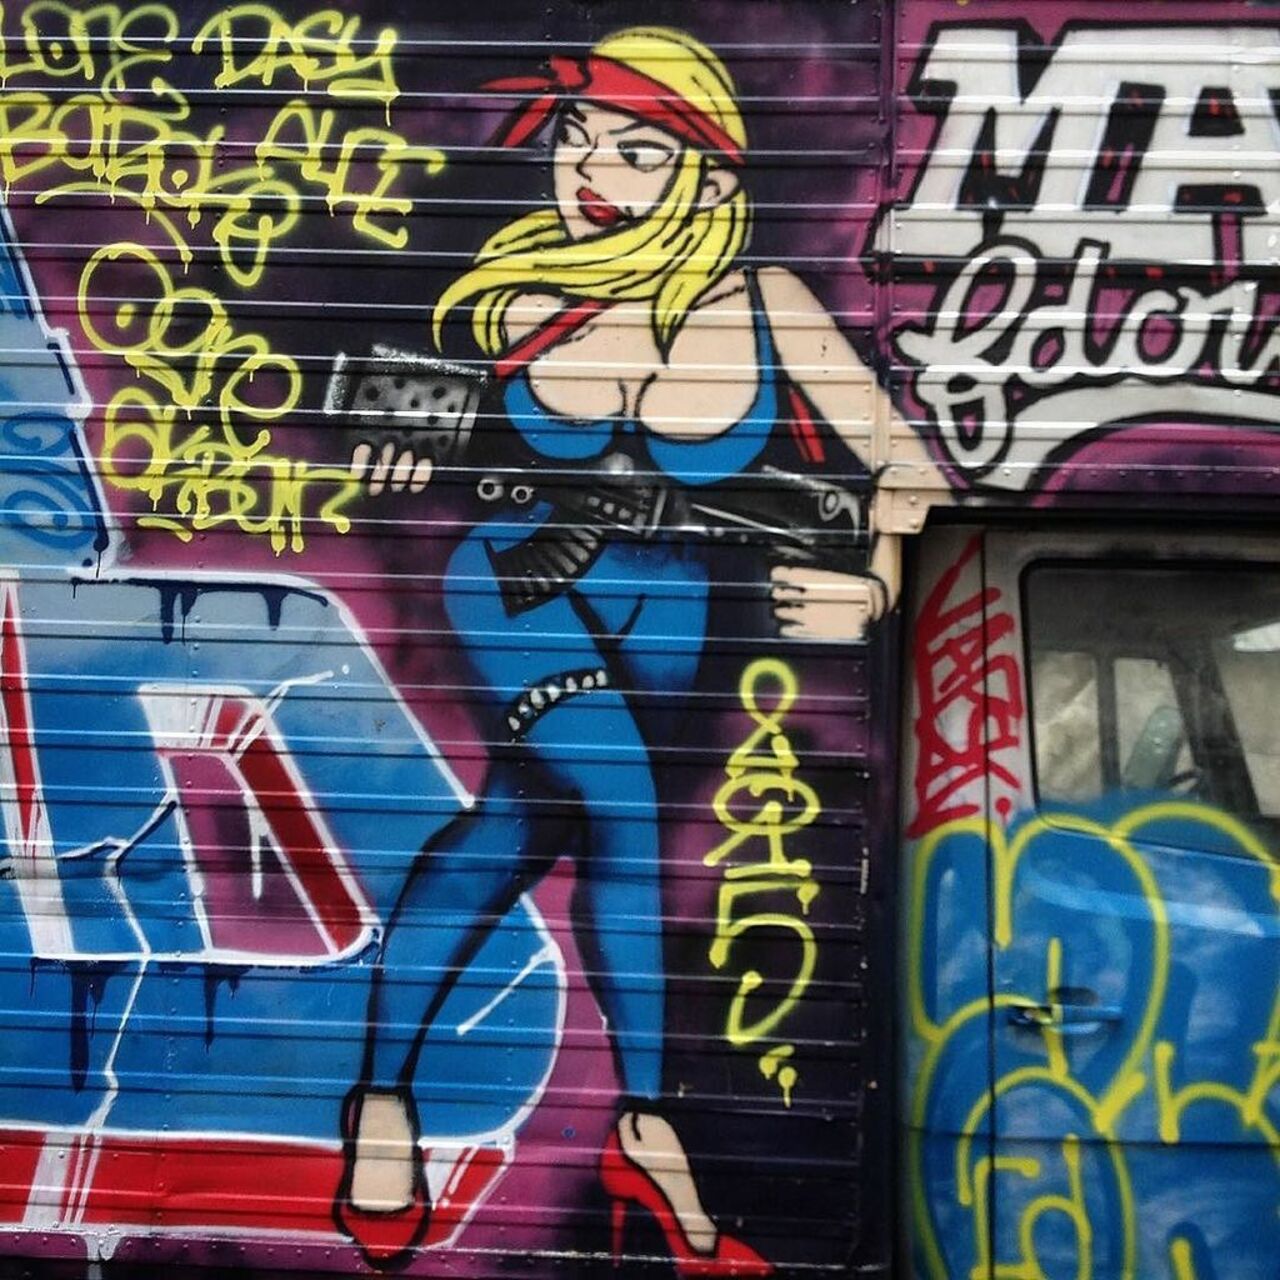 Faut pas l'énerver #girl #supergirl #street #streetart #streetartparis #graff #graffiti #wallart #sprayart #urban #… https://t.co/Tl6NrXlXkb